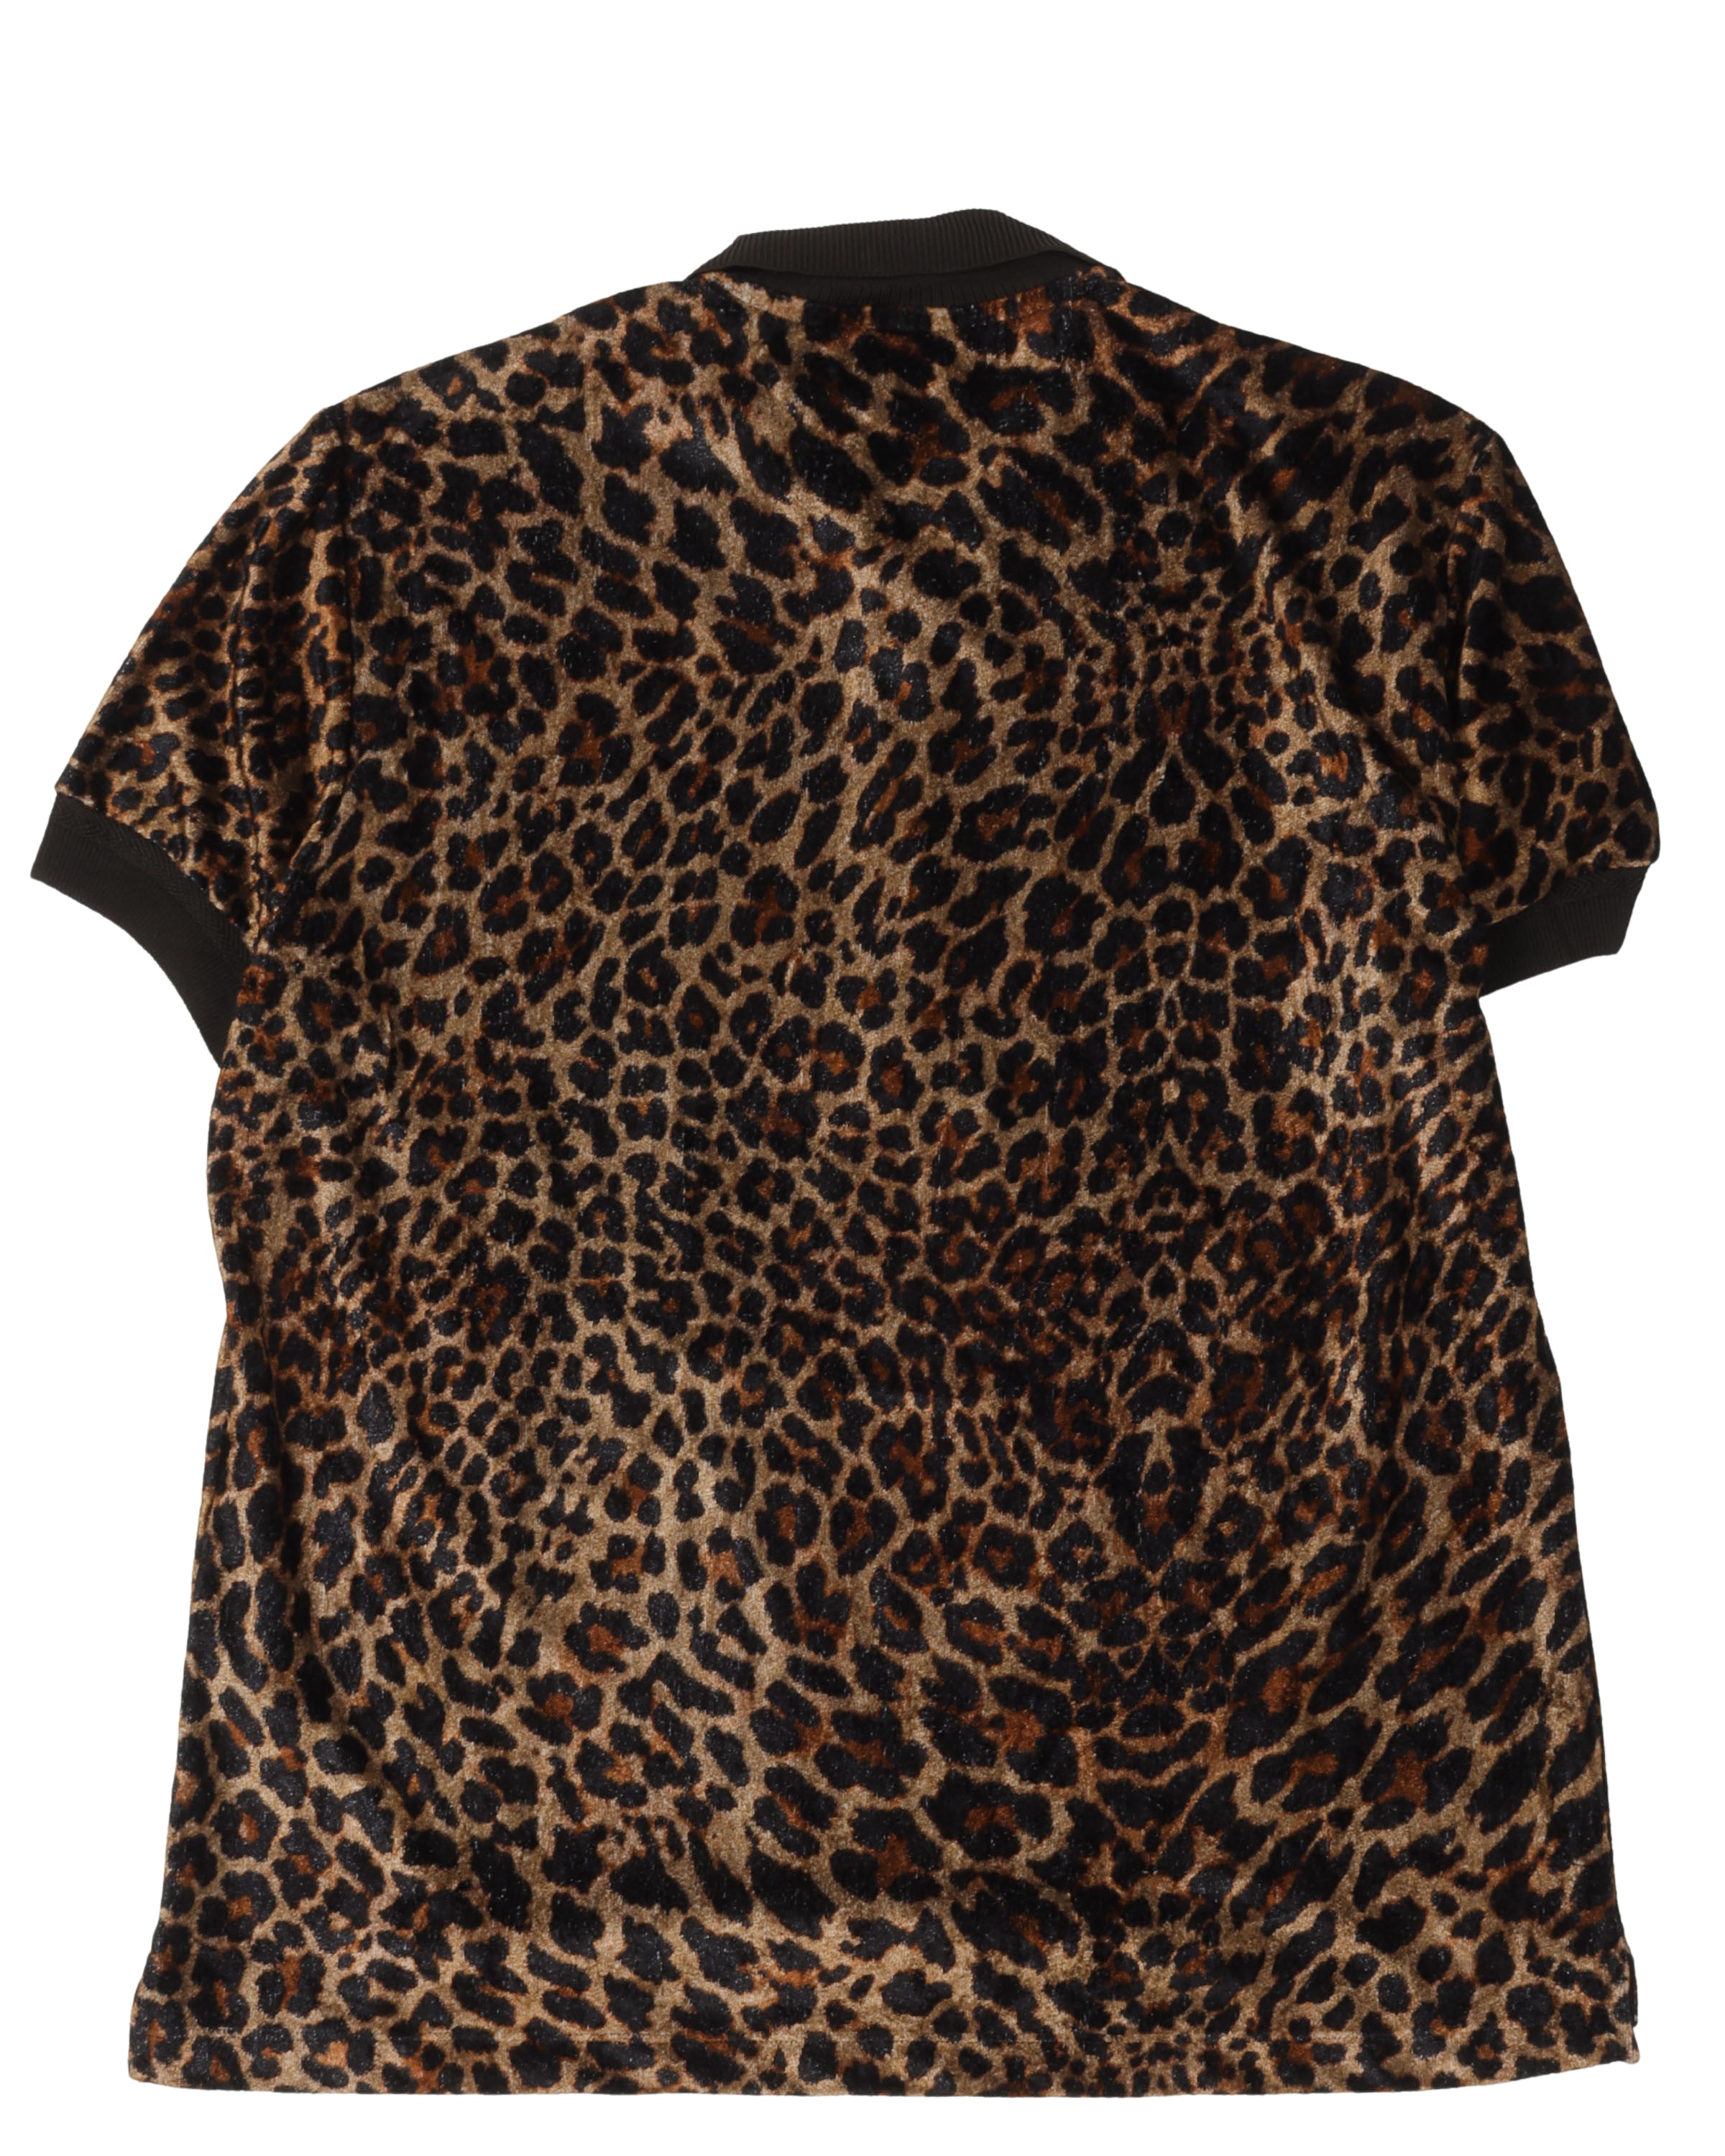 Leopard Print Collared Shirt